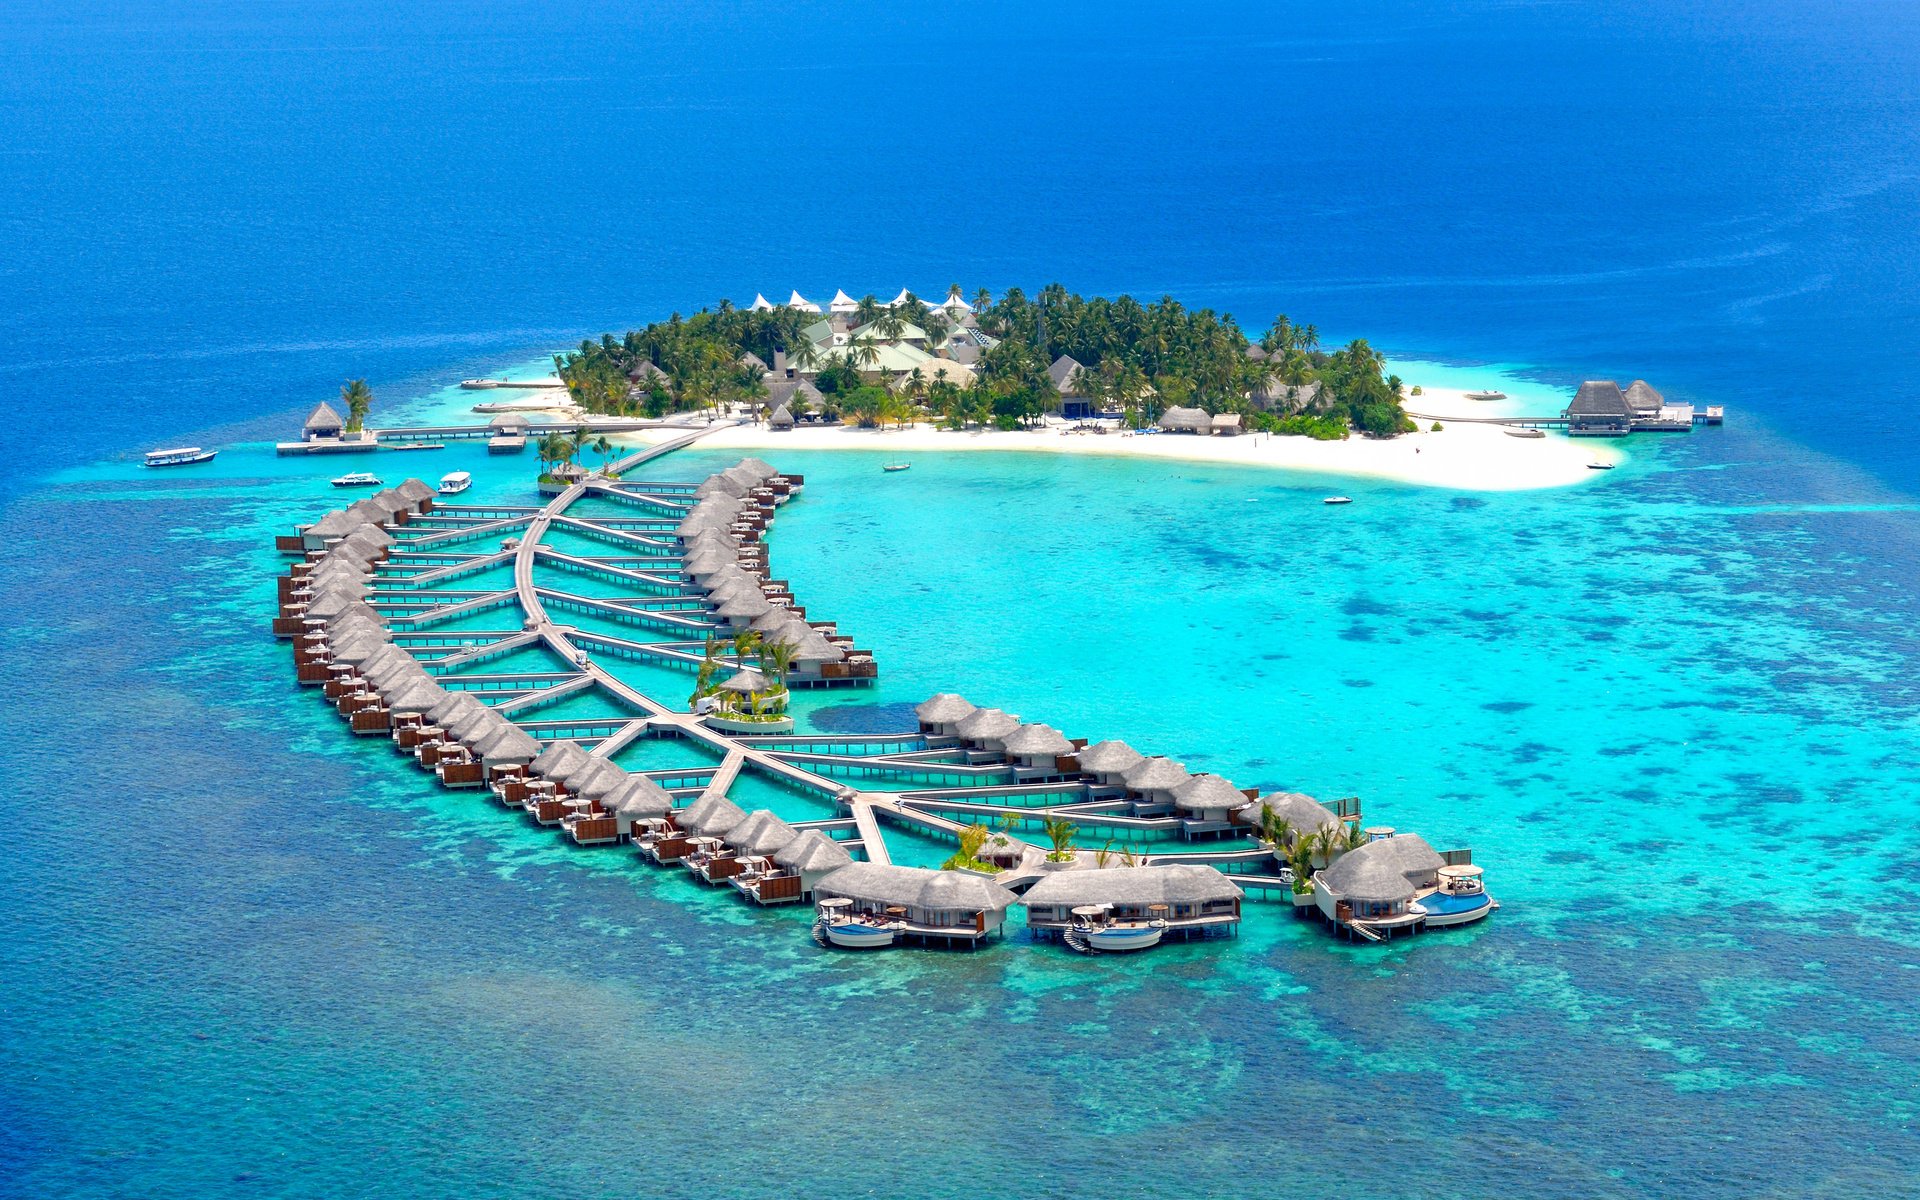 maldives-maldivy-ostrov-kurort-bungalo-pirs-plyazh-rif